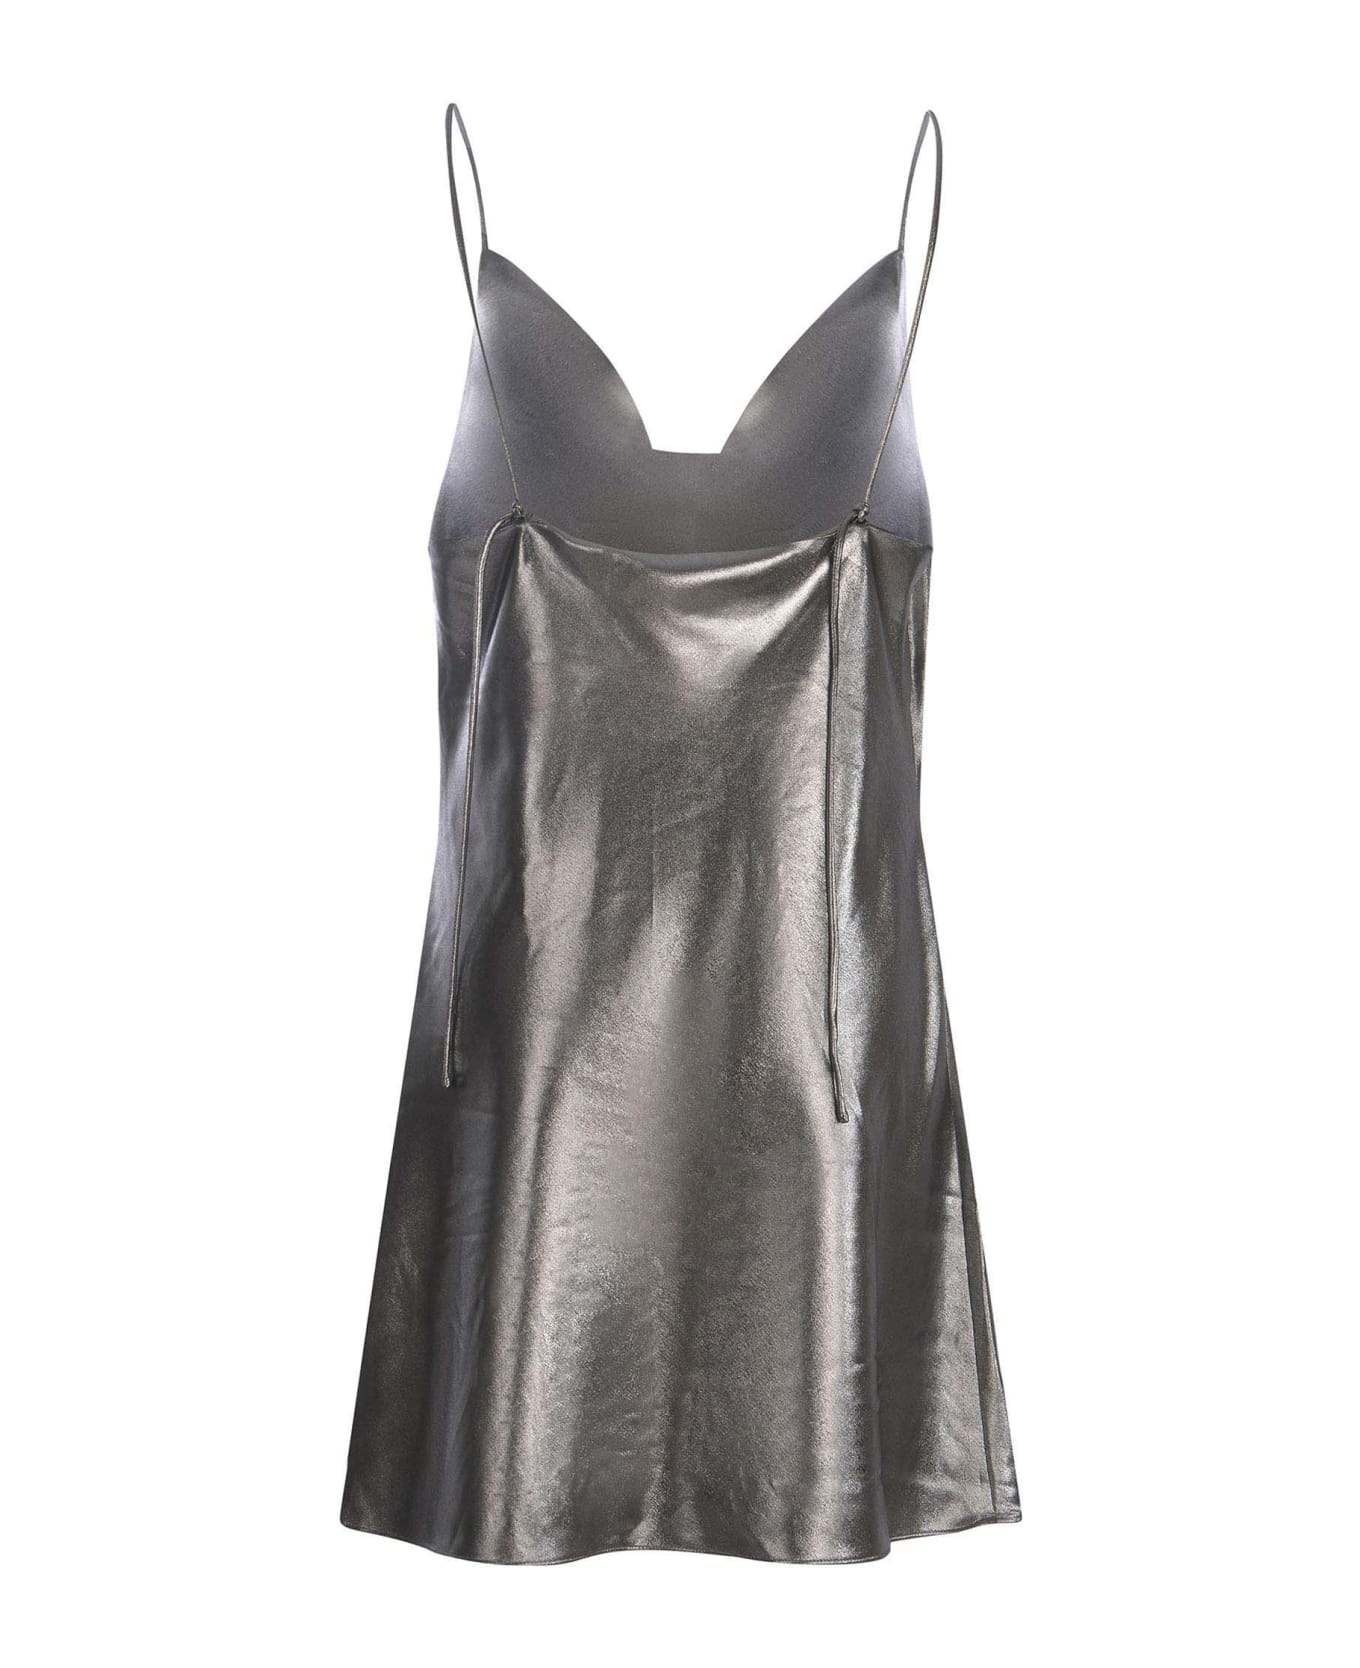 Rotate by Birger Christensen 'metallic Mini Slip Dress' - SILVER